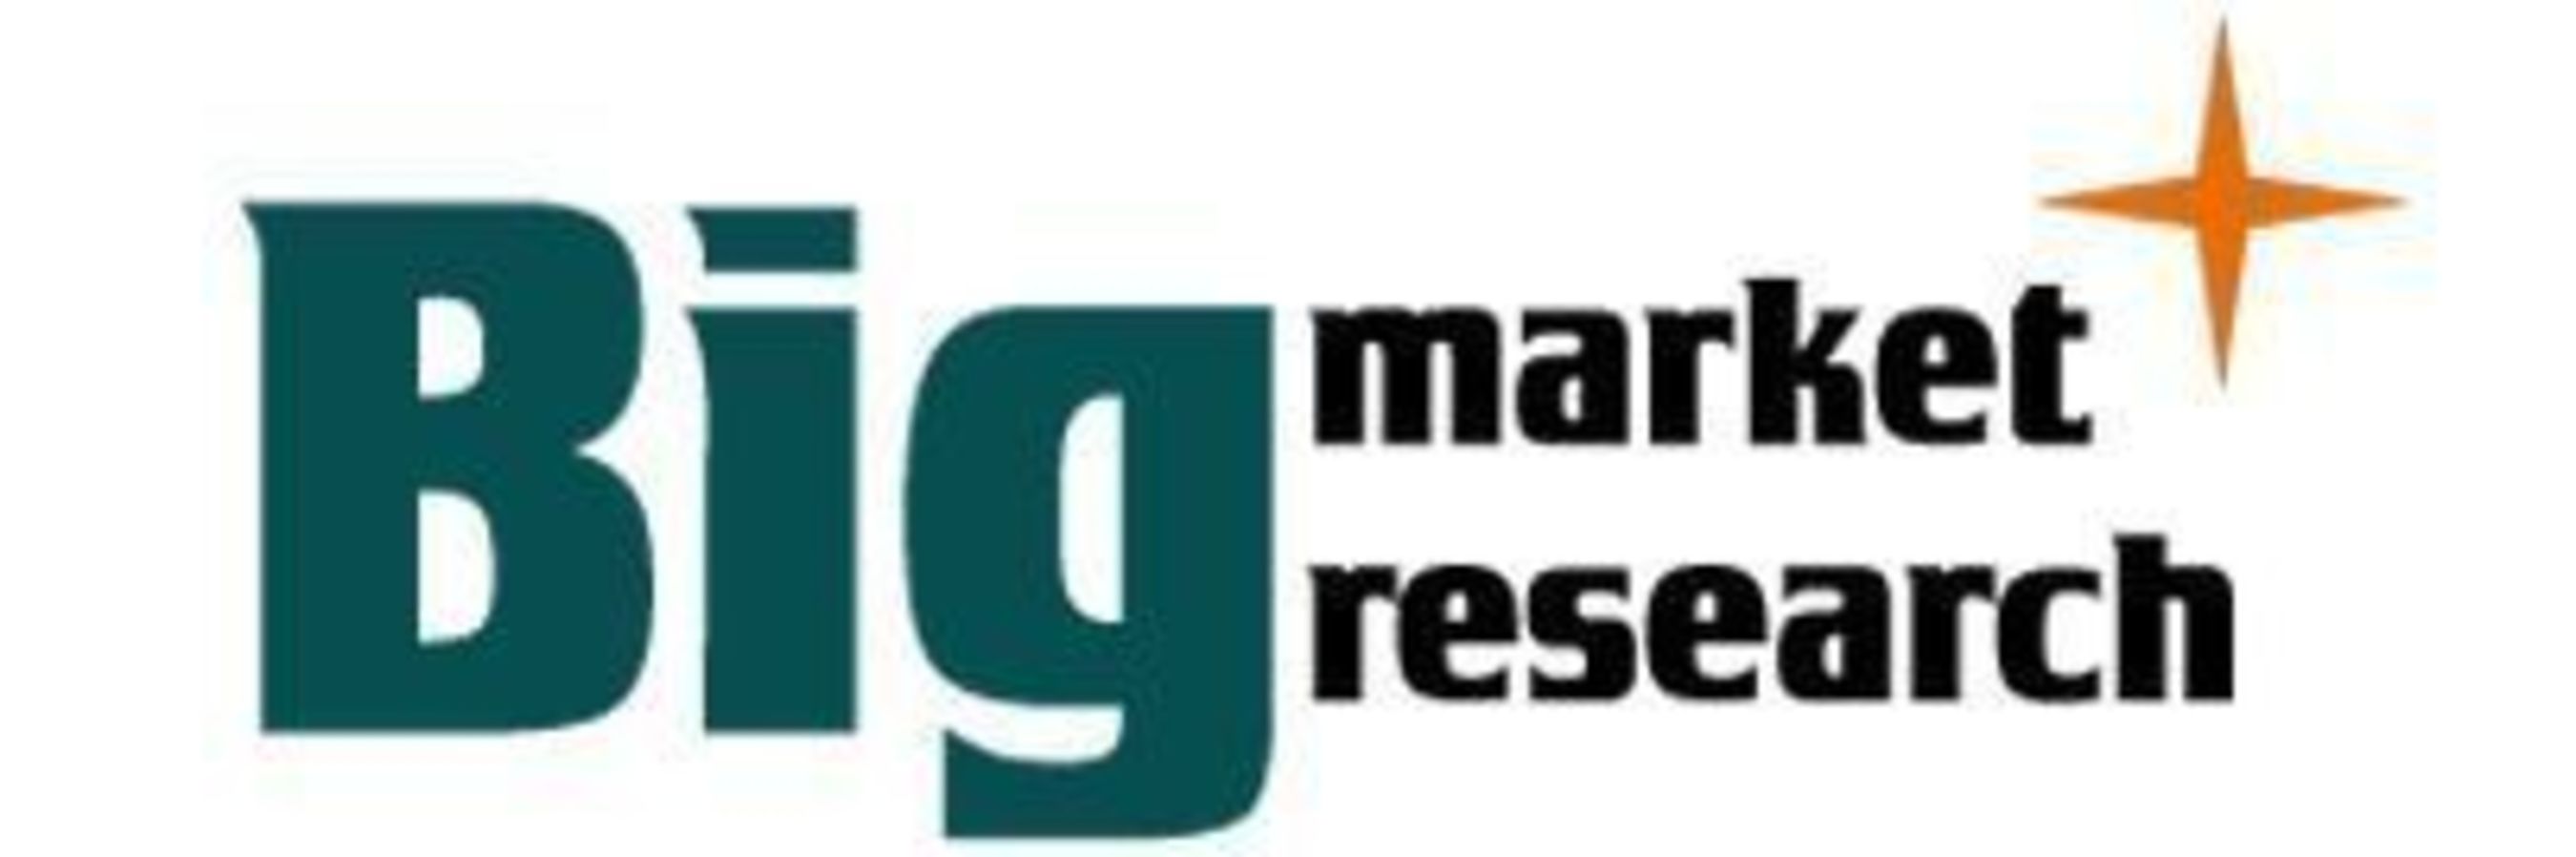 PR NEWSWIRE INDIA- Big Market research (PRNewsFoto/Big Market Research)